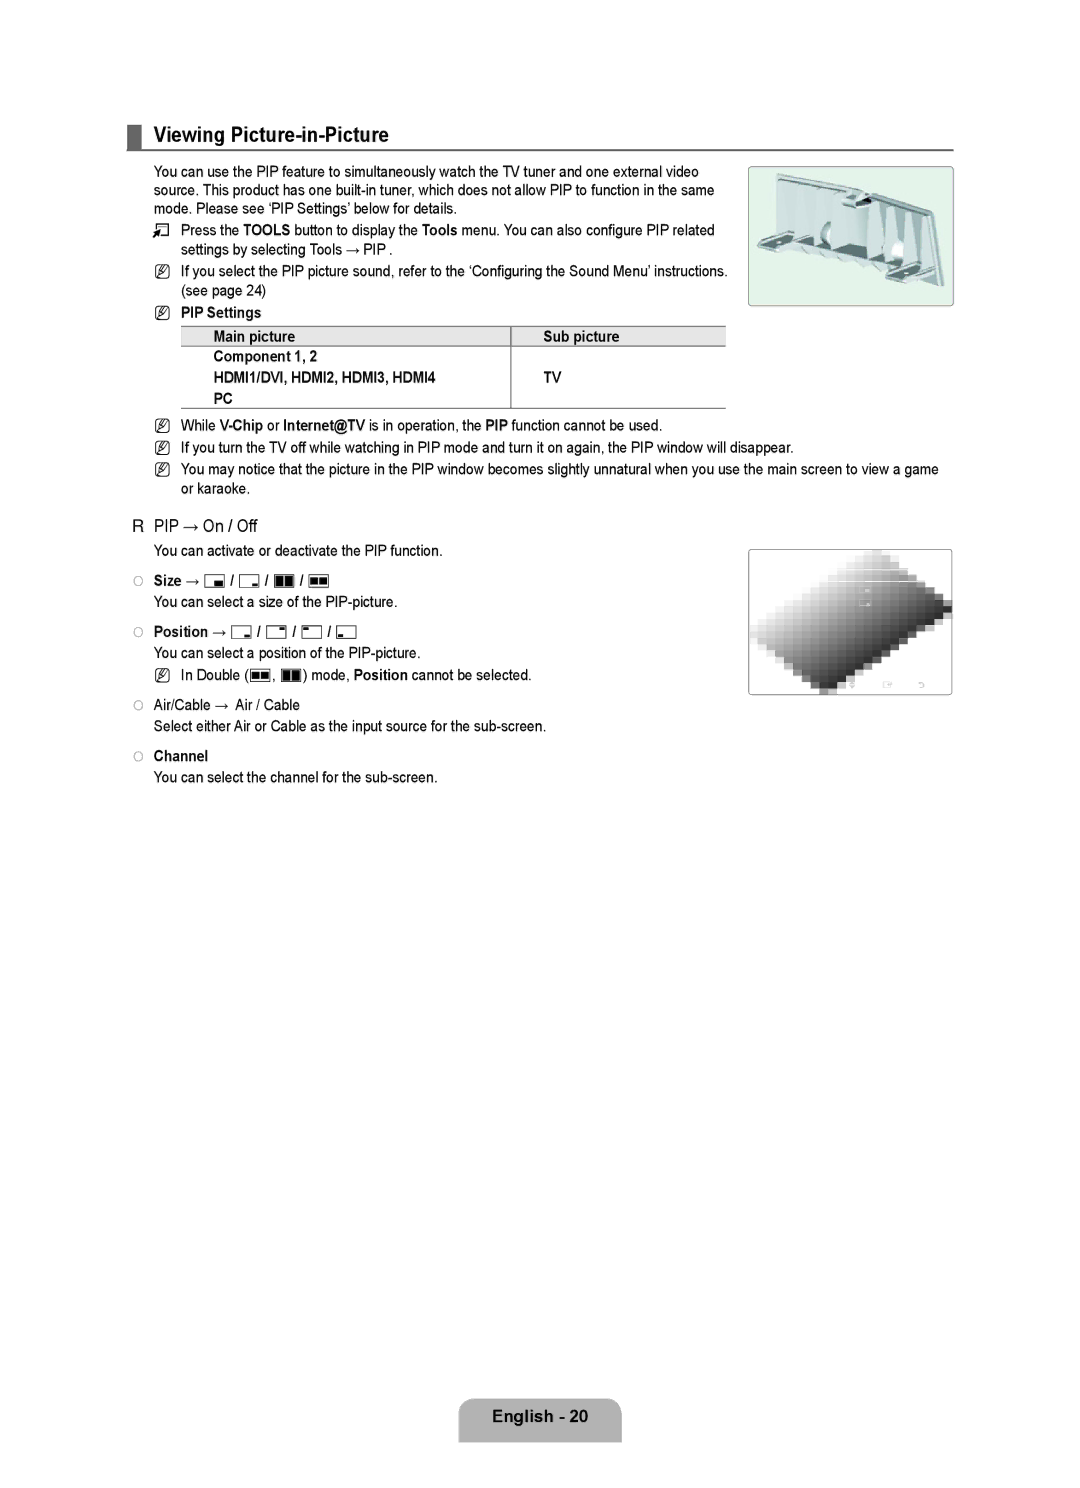 Samsung LN6B60 user manual Viewing Picture-in-Picture, PIP → On / Off, HDMI1/DVI, HDMI2, HDMI3, HDMI4 